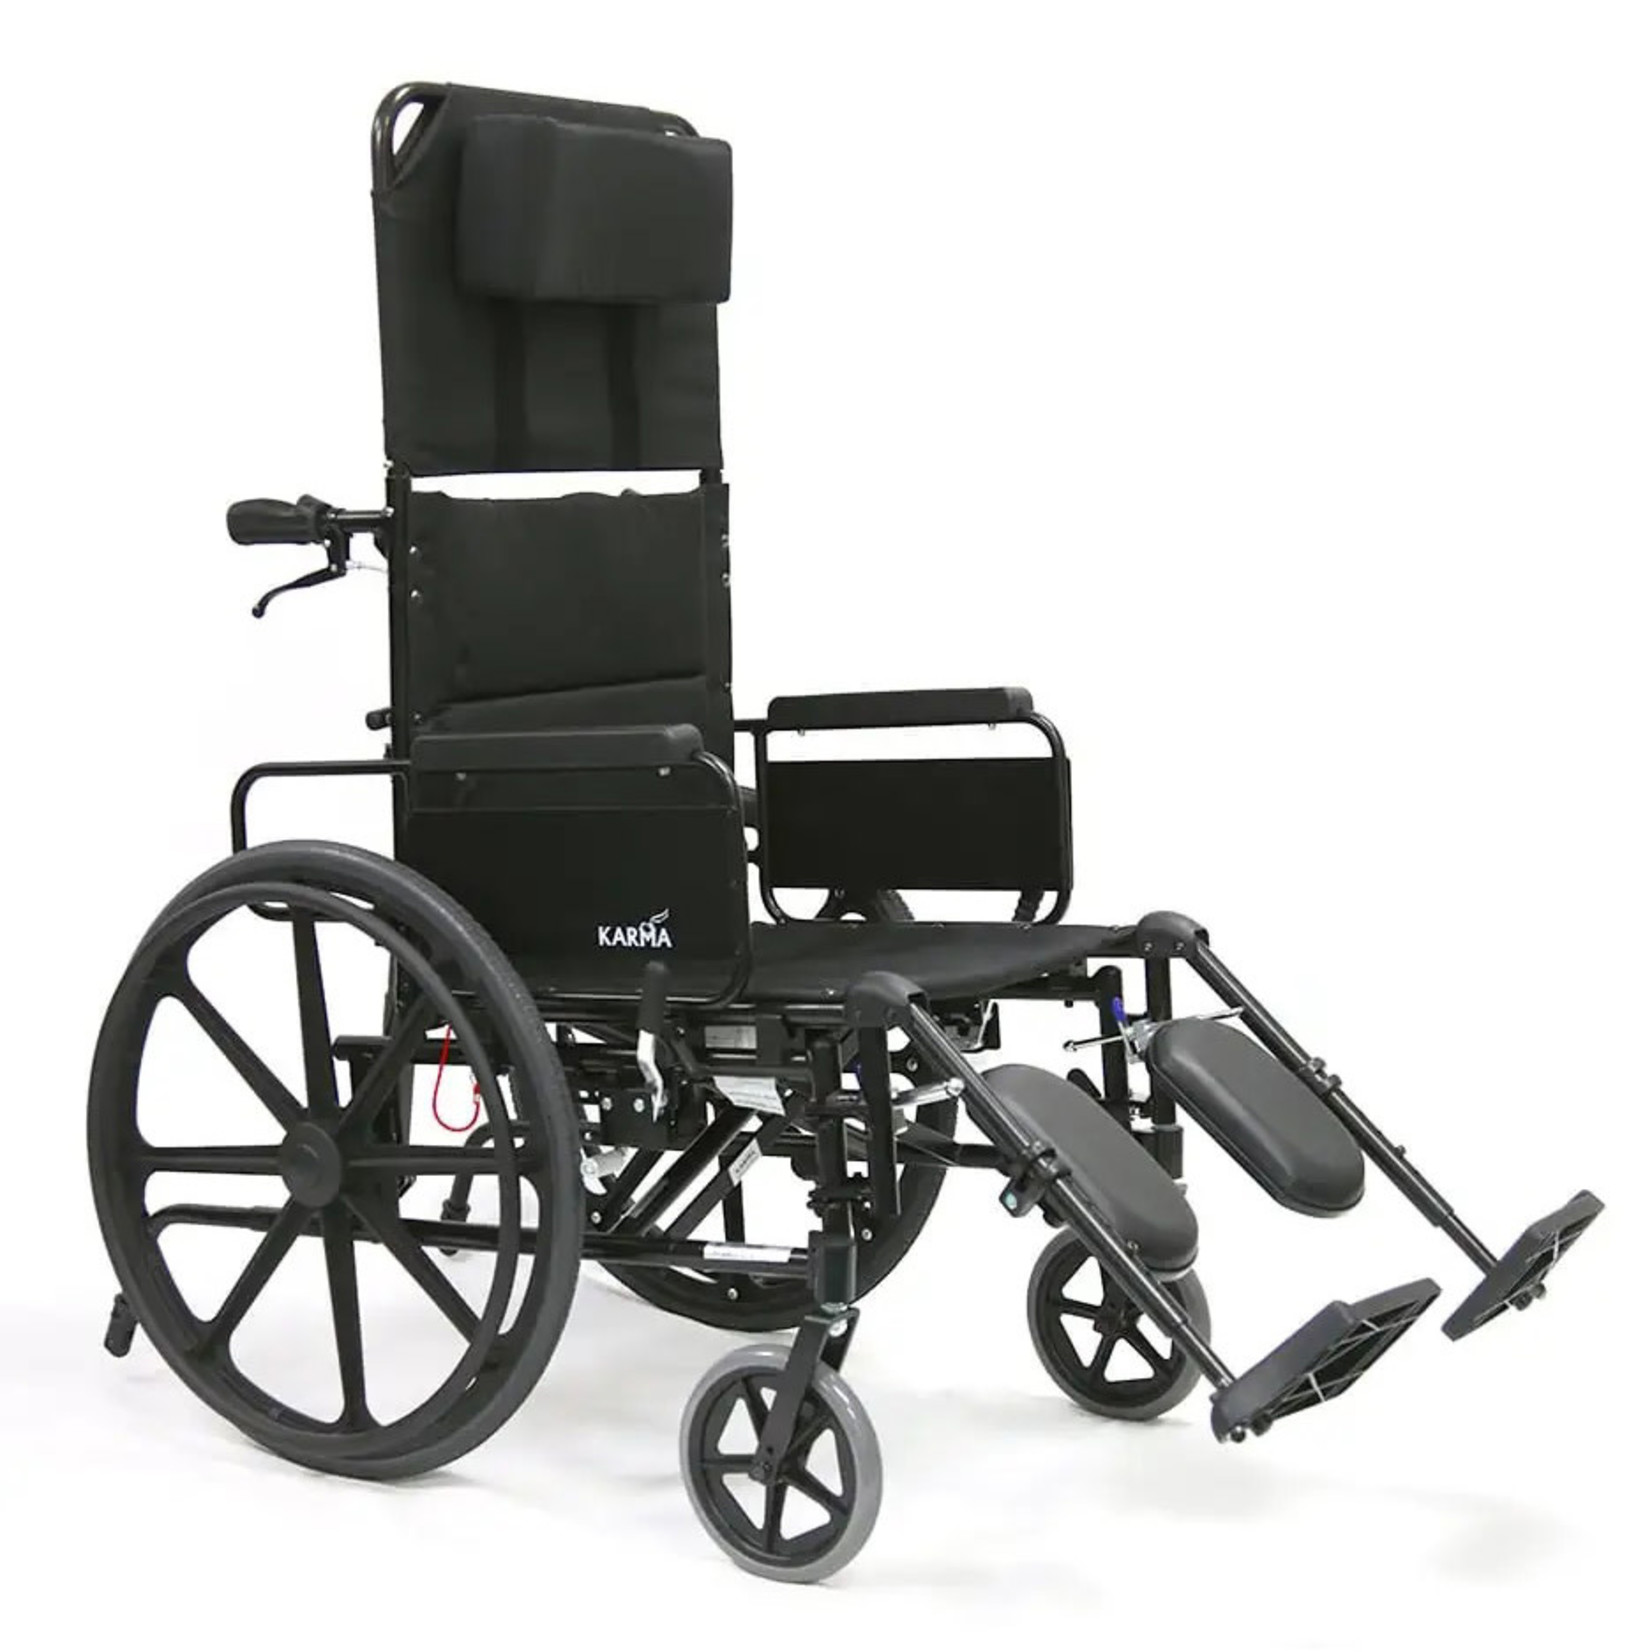 Karman KM5000 Lightweight Reclining Wheelchair with Removable Desk Armrest